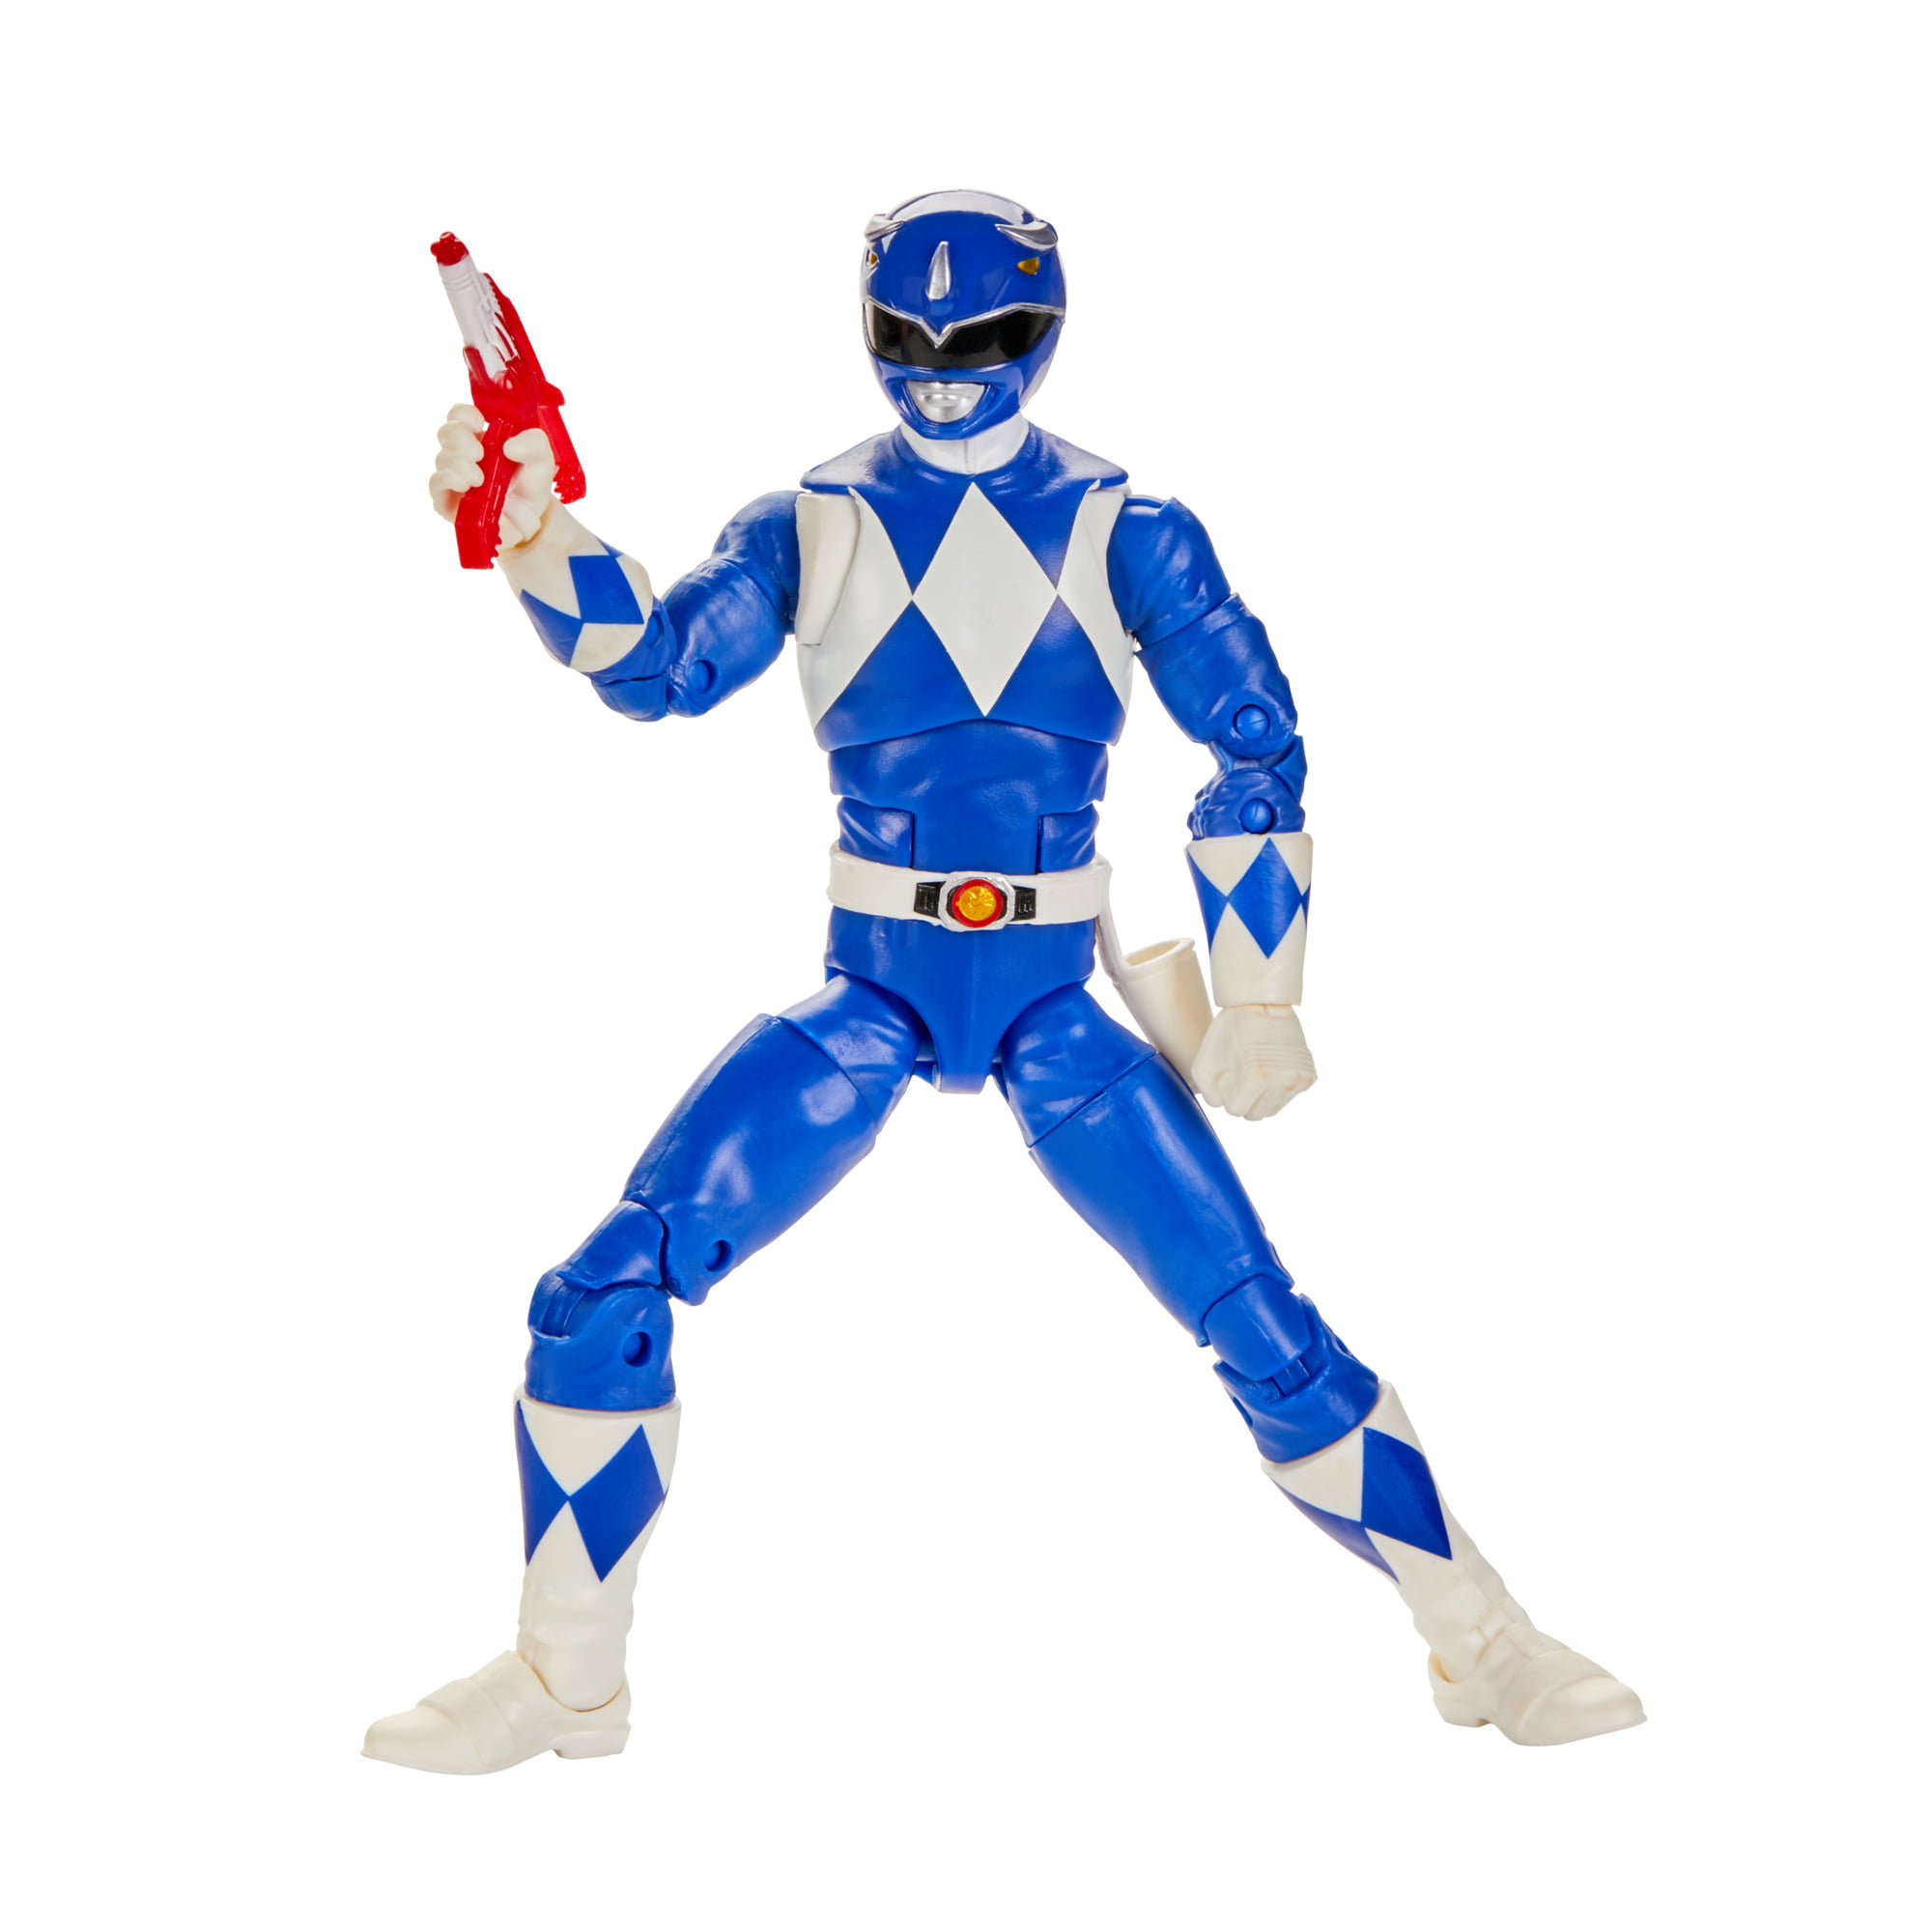 Ranger Slayer,Mighty Morphin Blue Power Rangers Lightning Collection Lot/Bundle